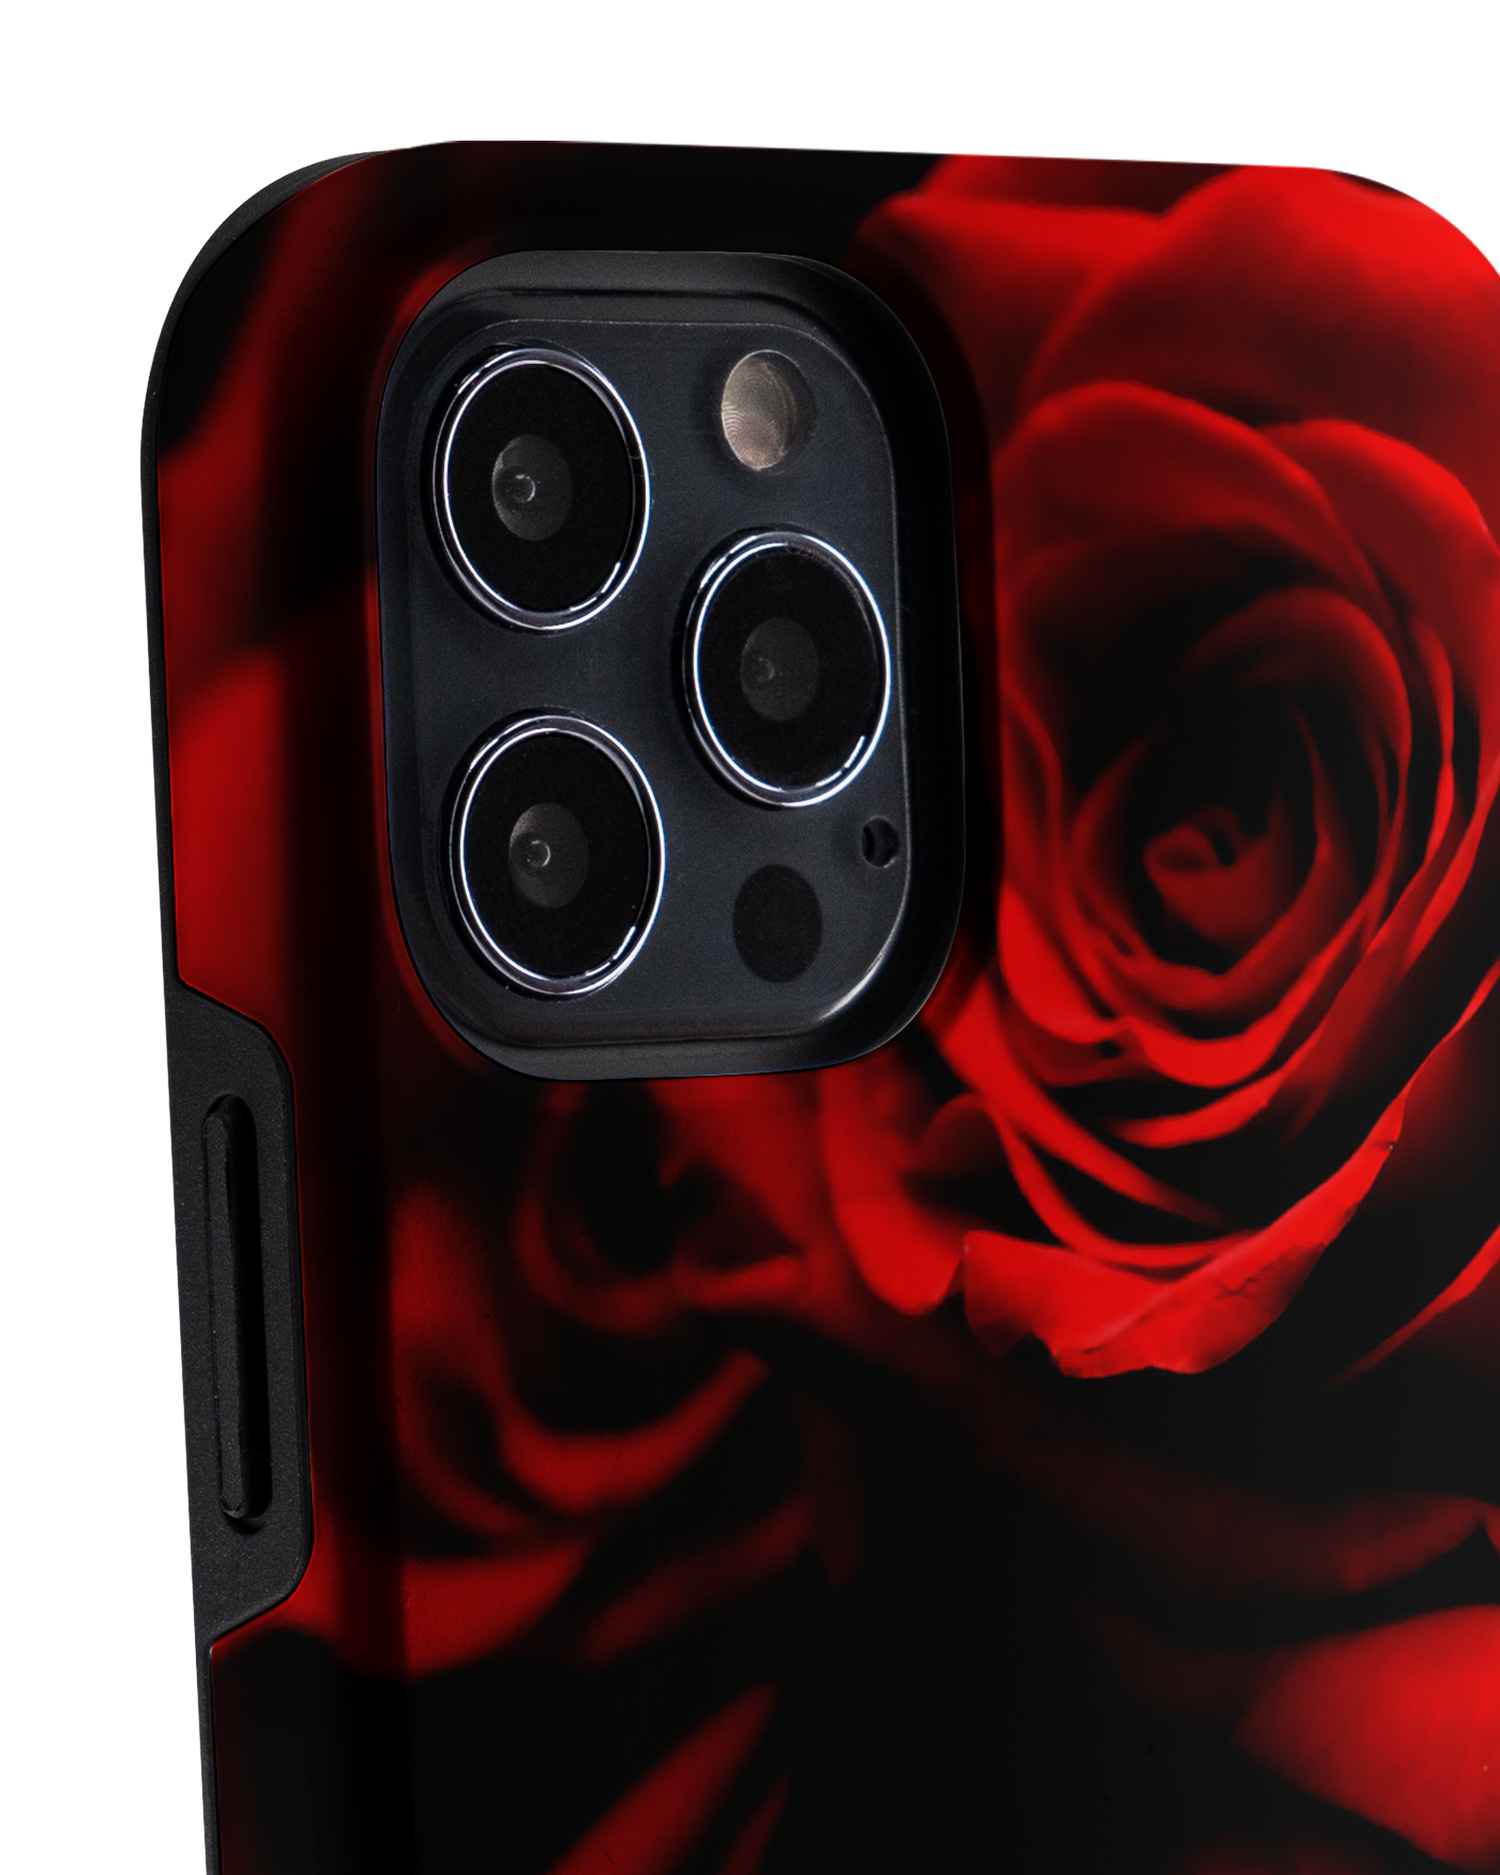 Red Roses Premium Handyhülle Apple iPhone 12, Apple iPhone 12 Pro